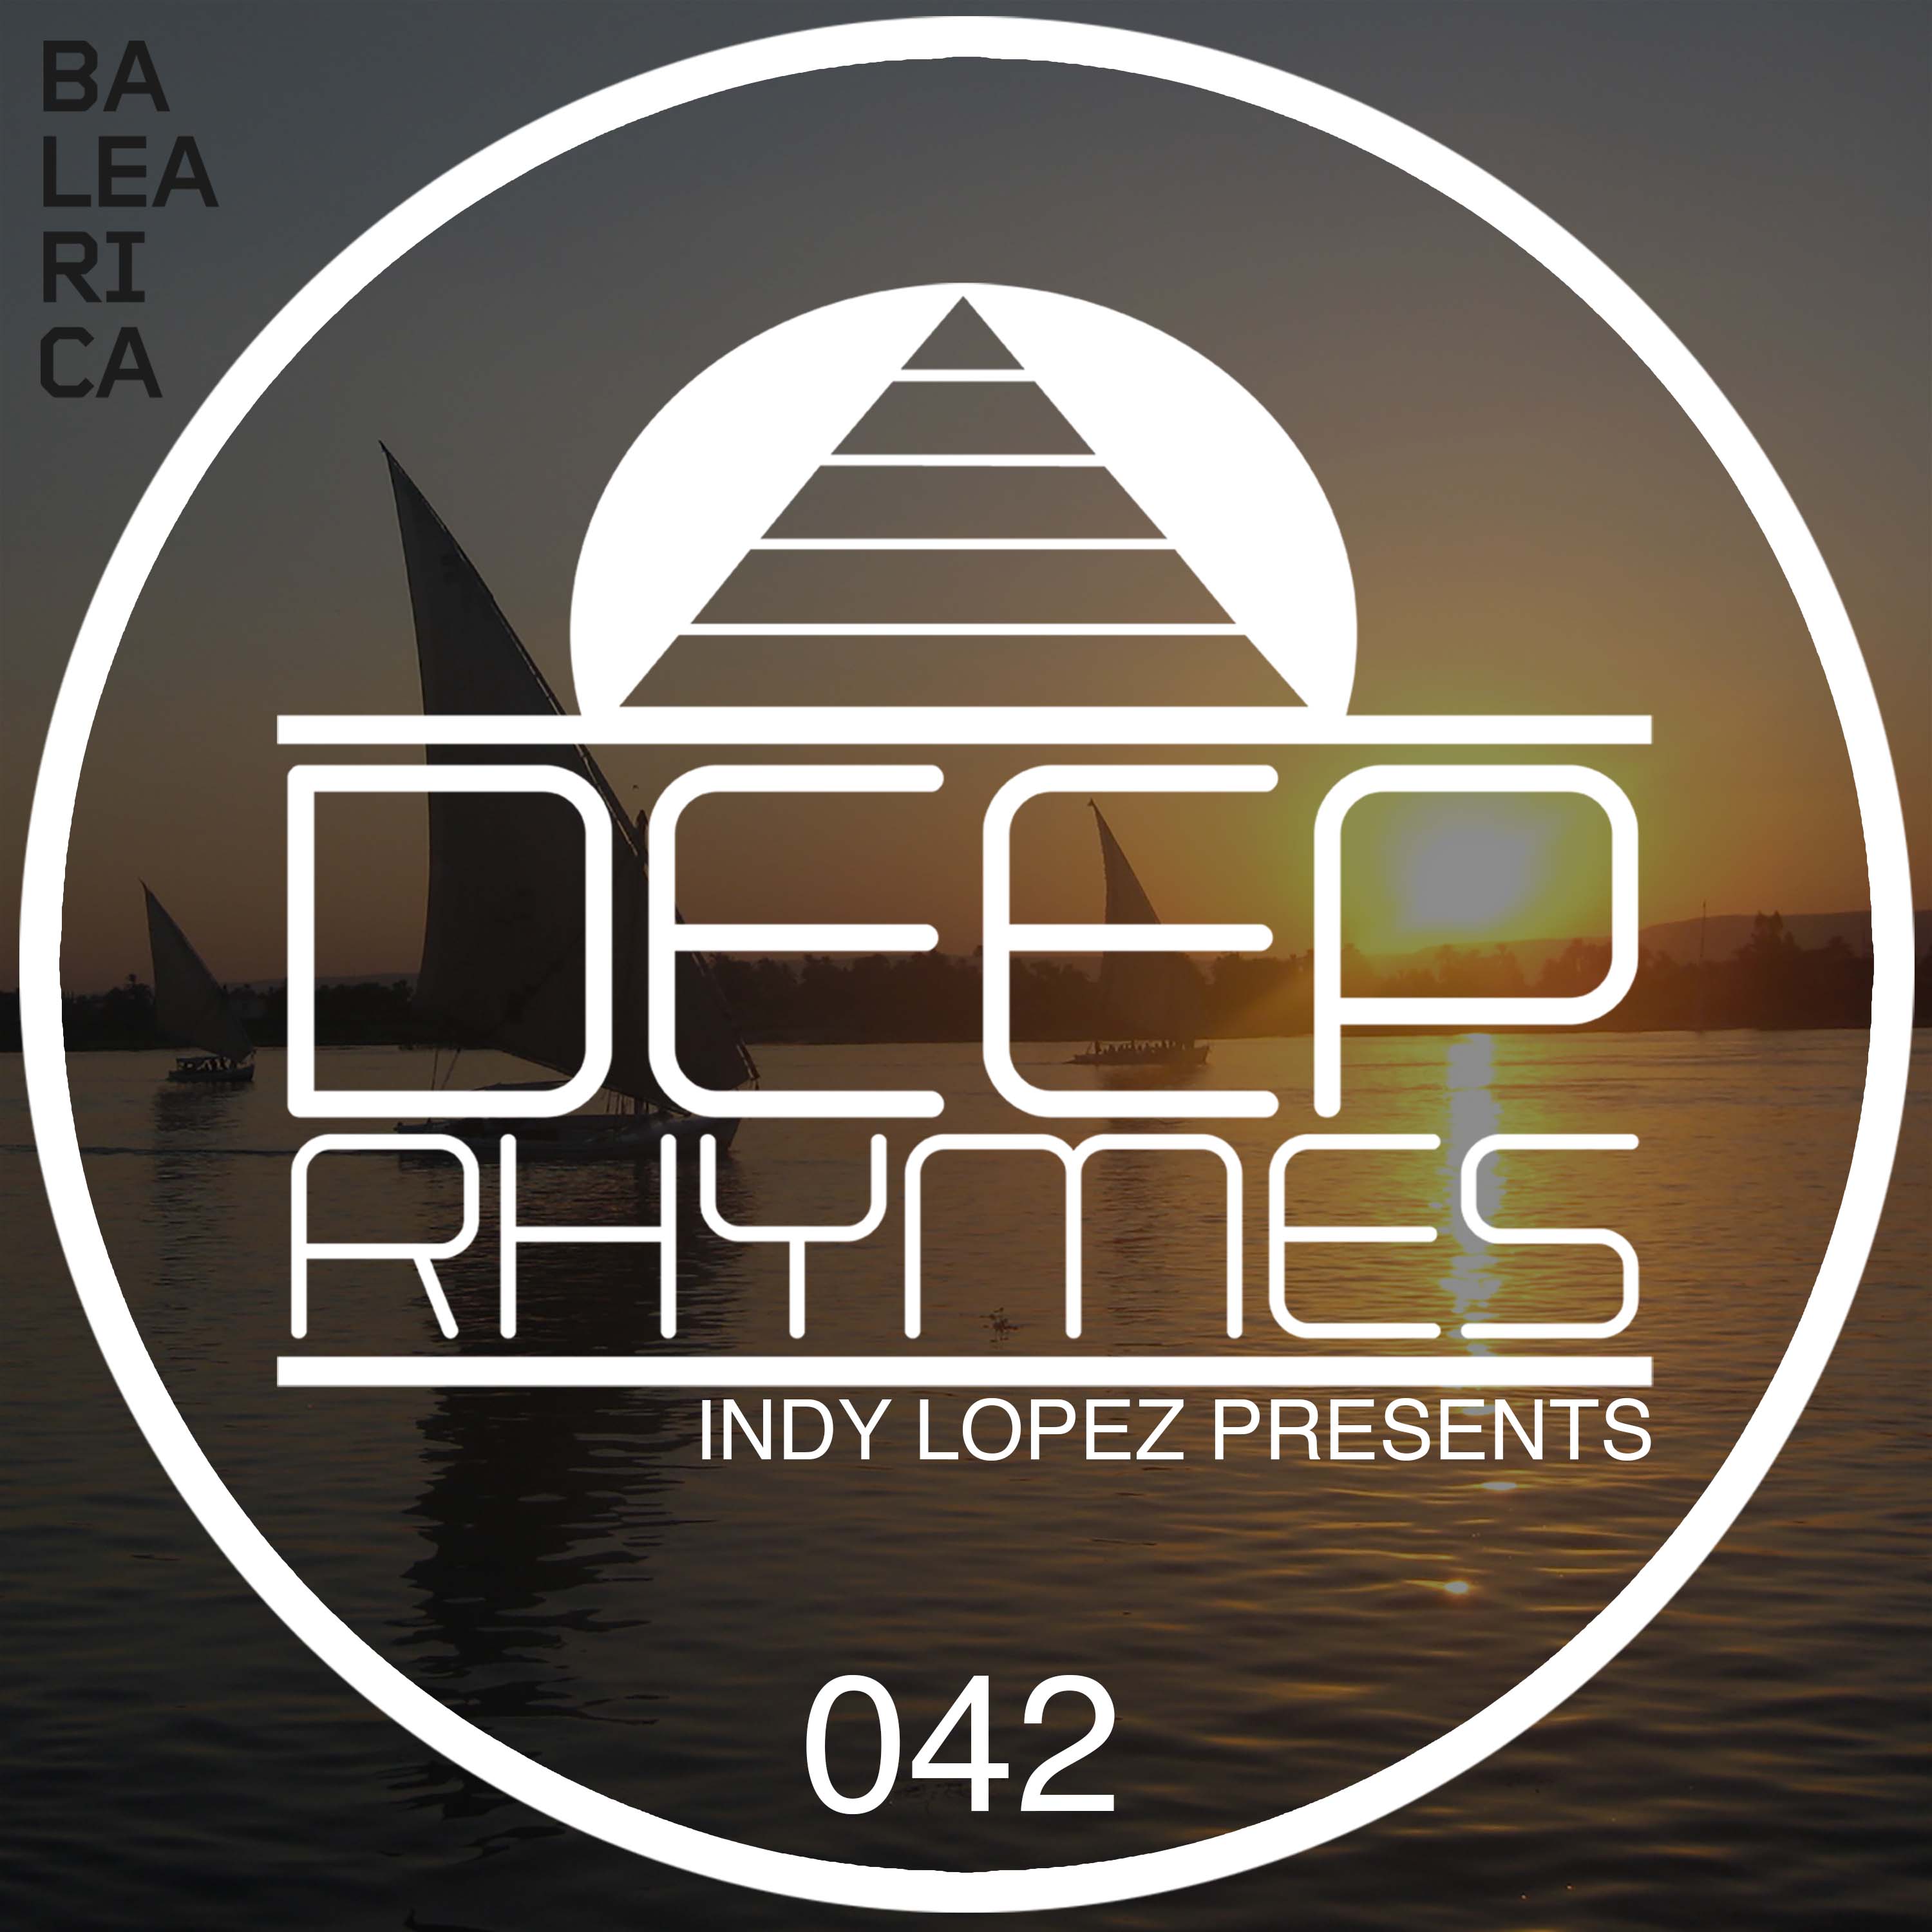 Deep Rhymes Music at Balearica 042